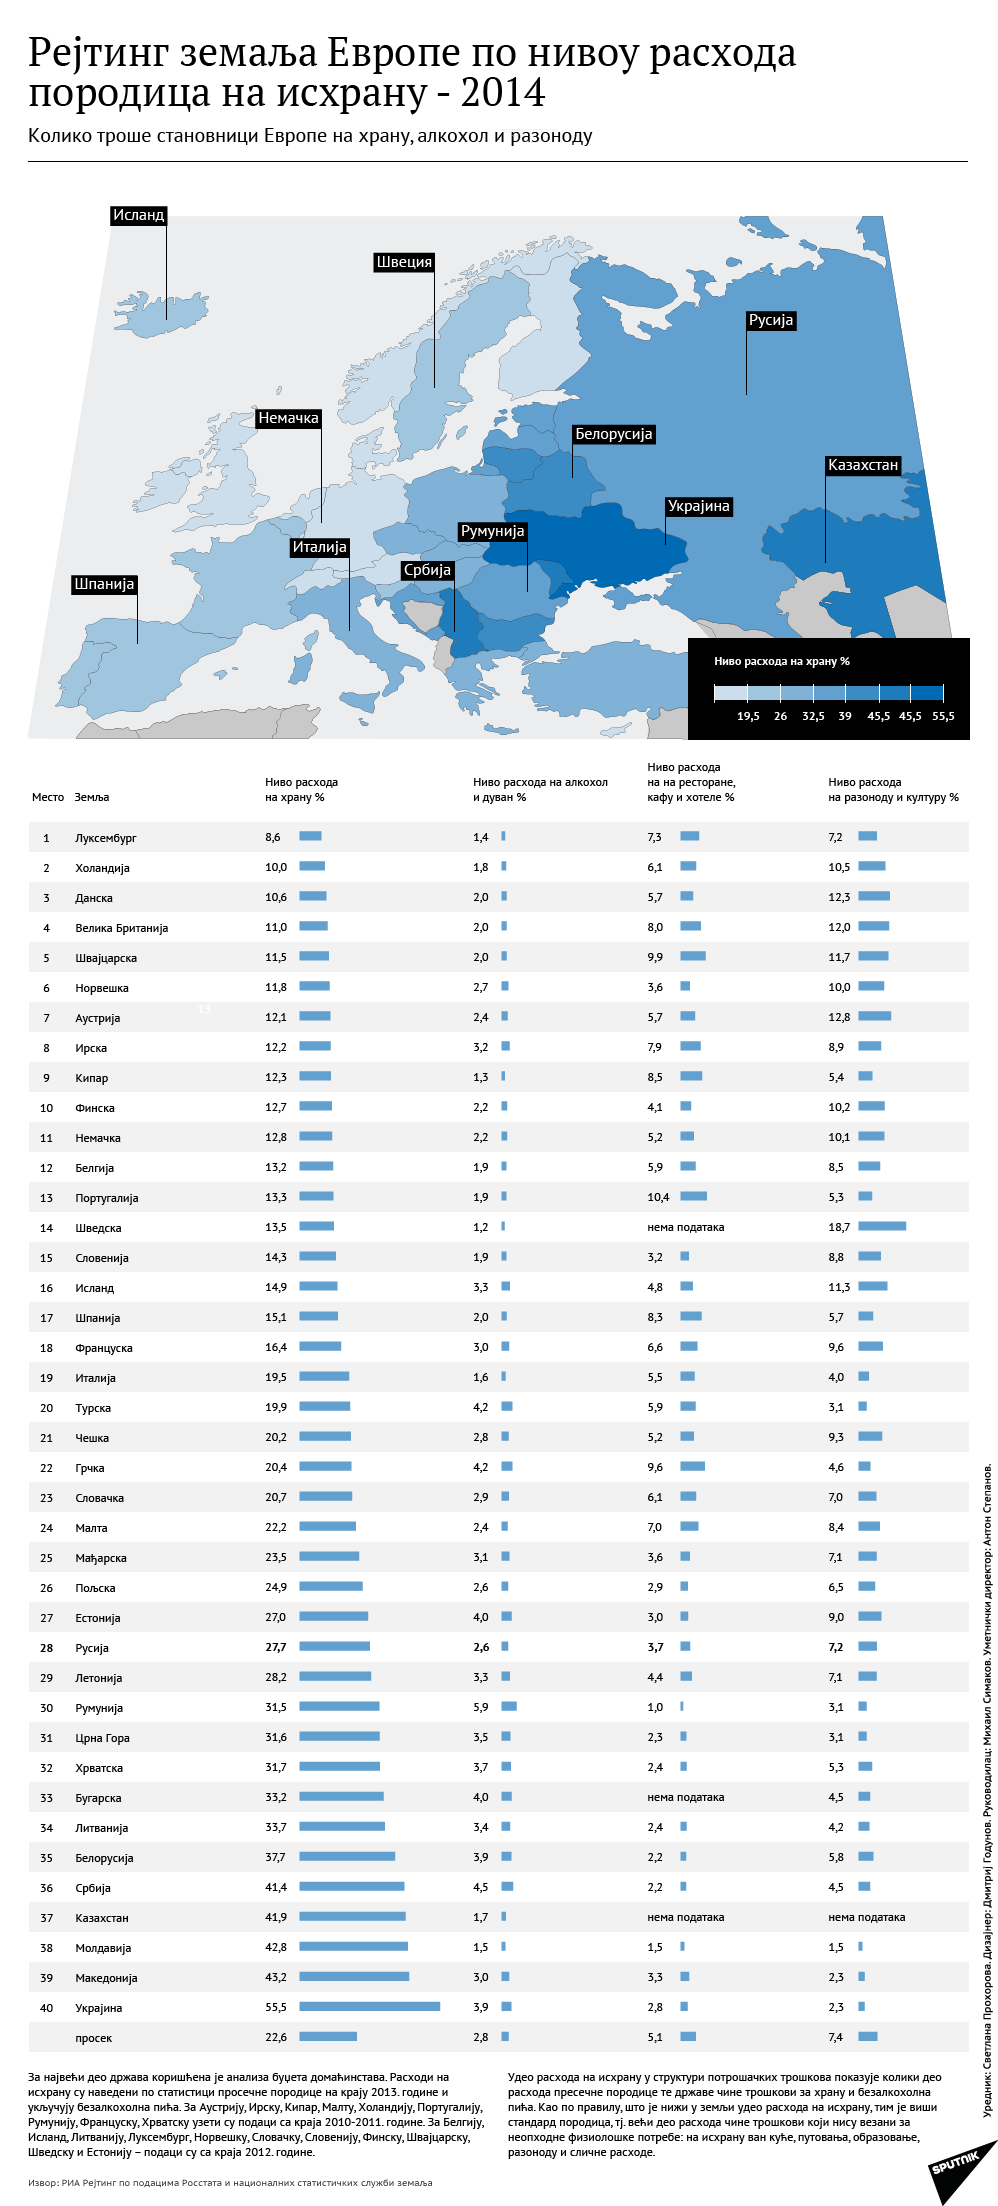 Rejting zemalja Evrope po nivou rashoda porodica na ishranu - 2014 - Sputnik Srbija